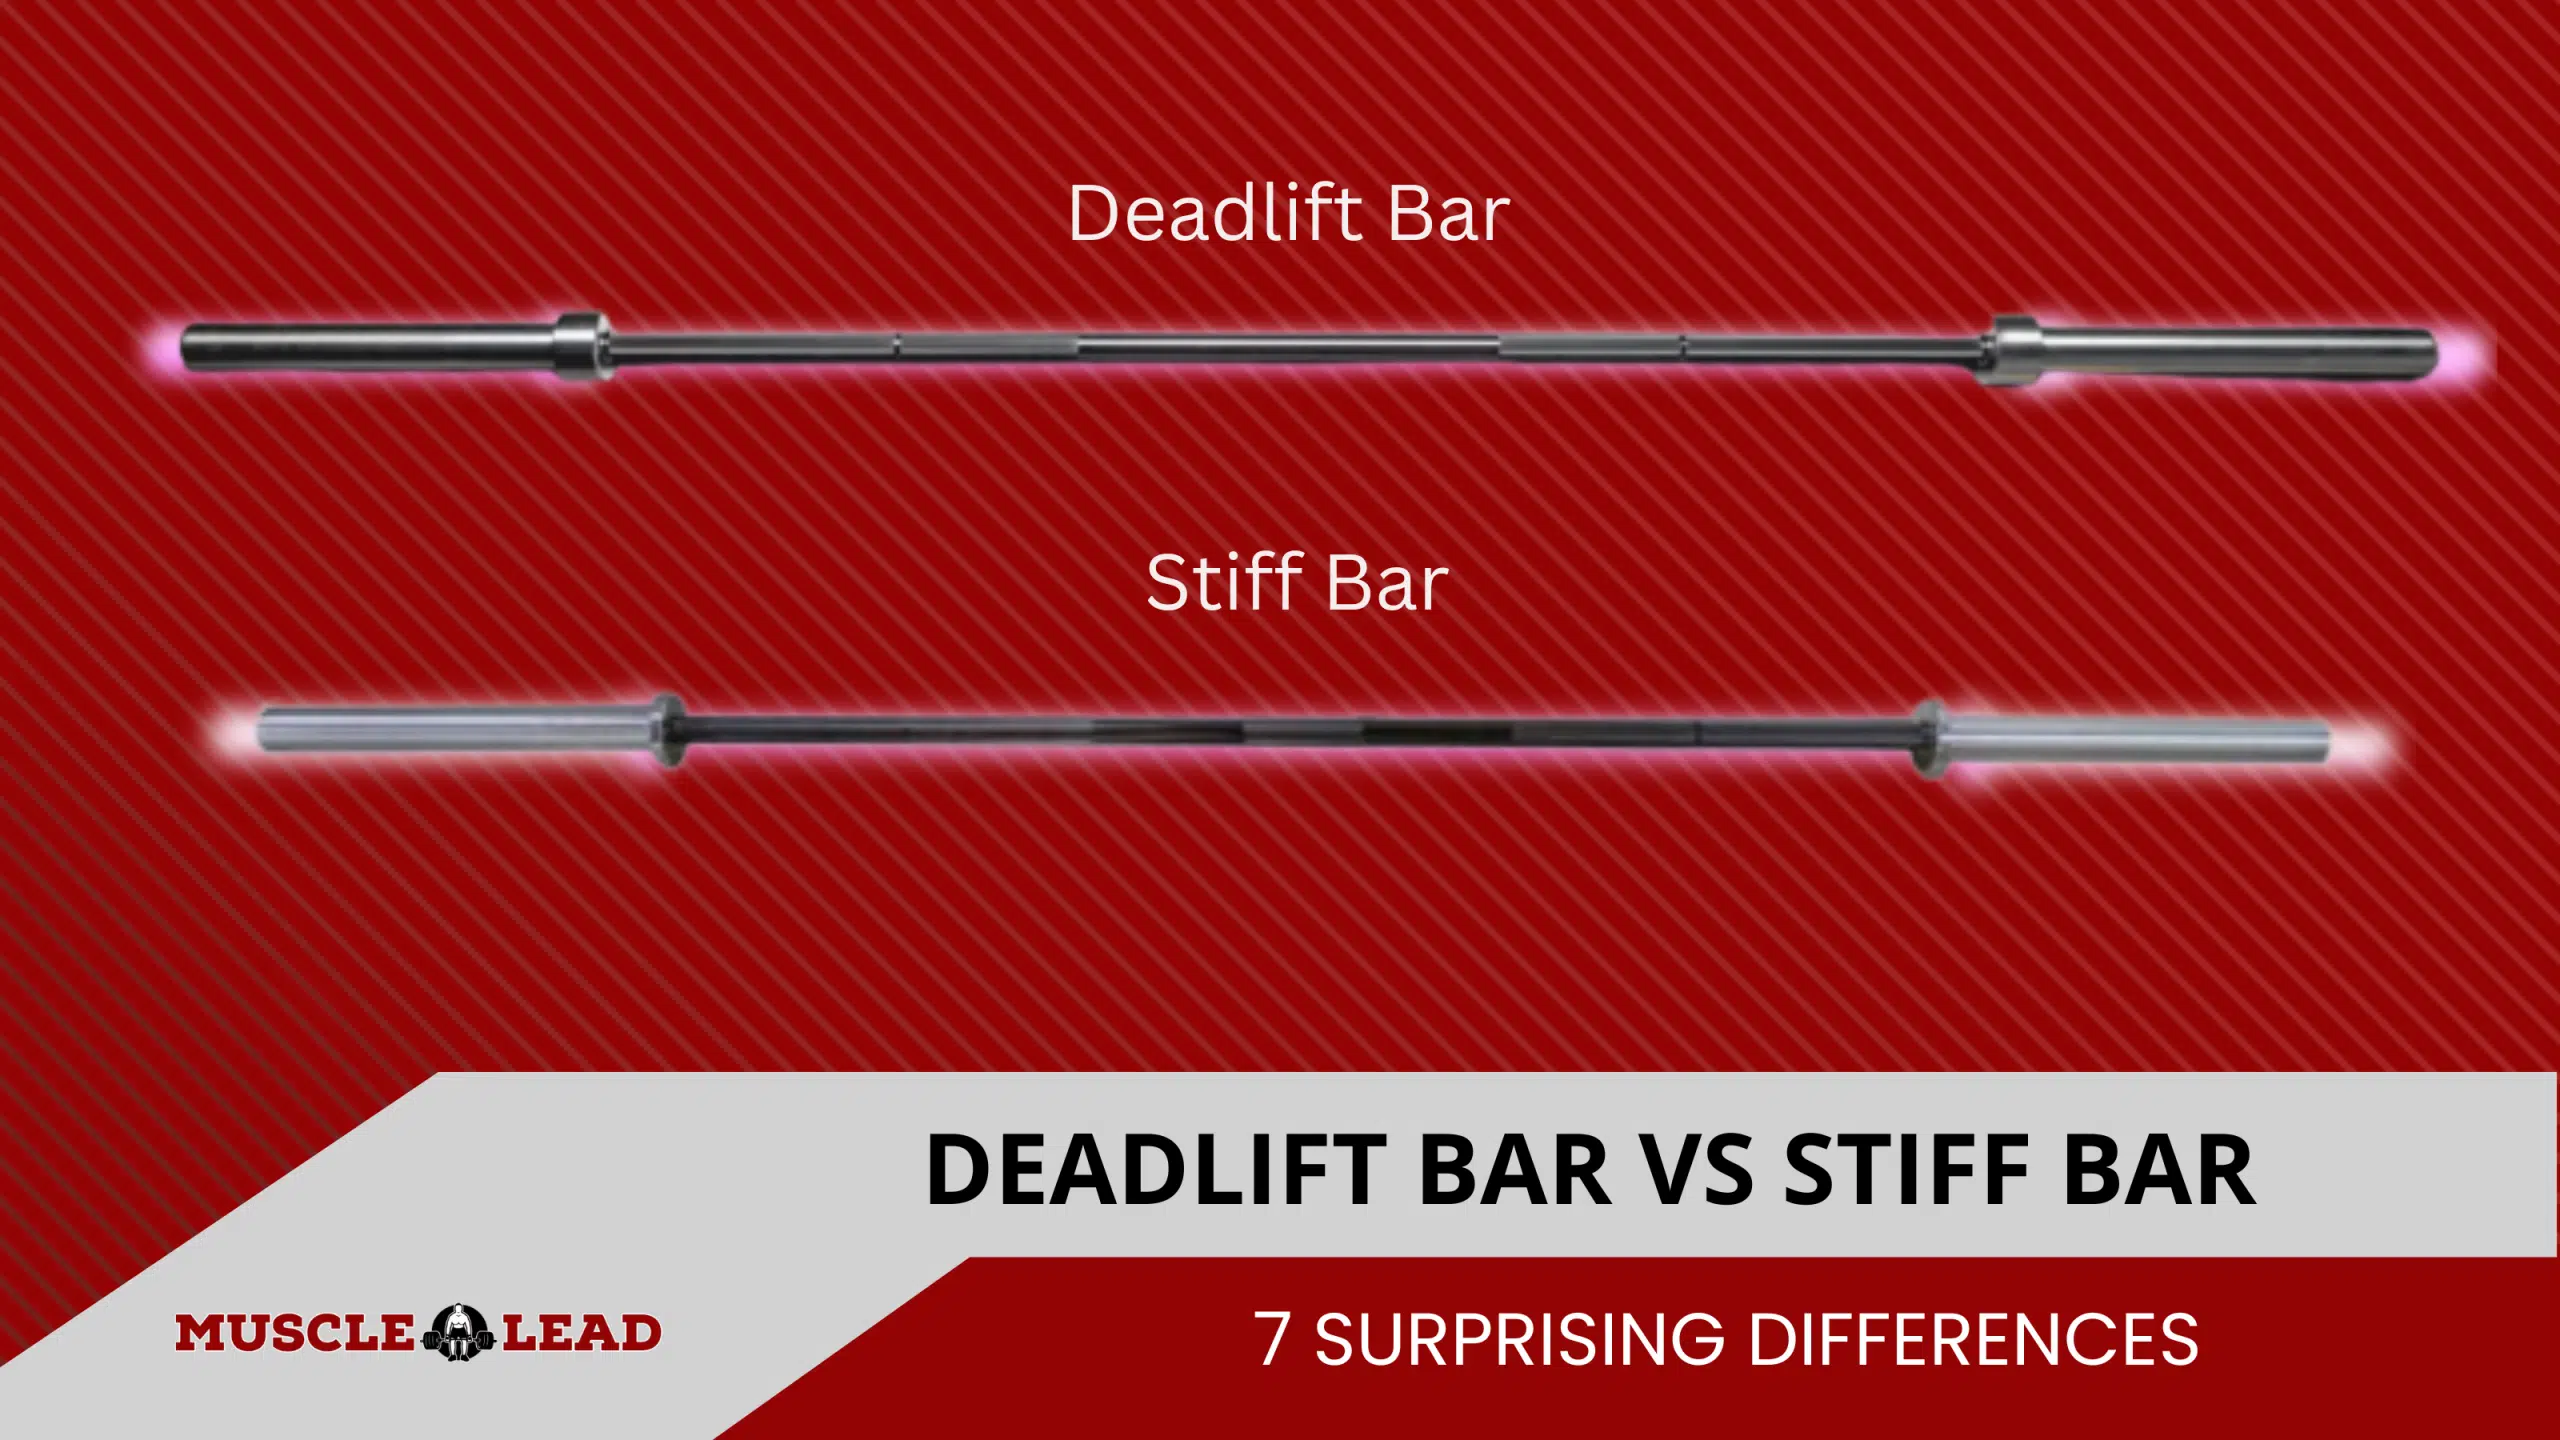 Deadlift Bar vs Stiff Bar 7 Surprising Differences